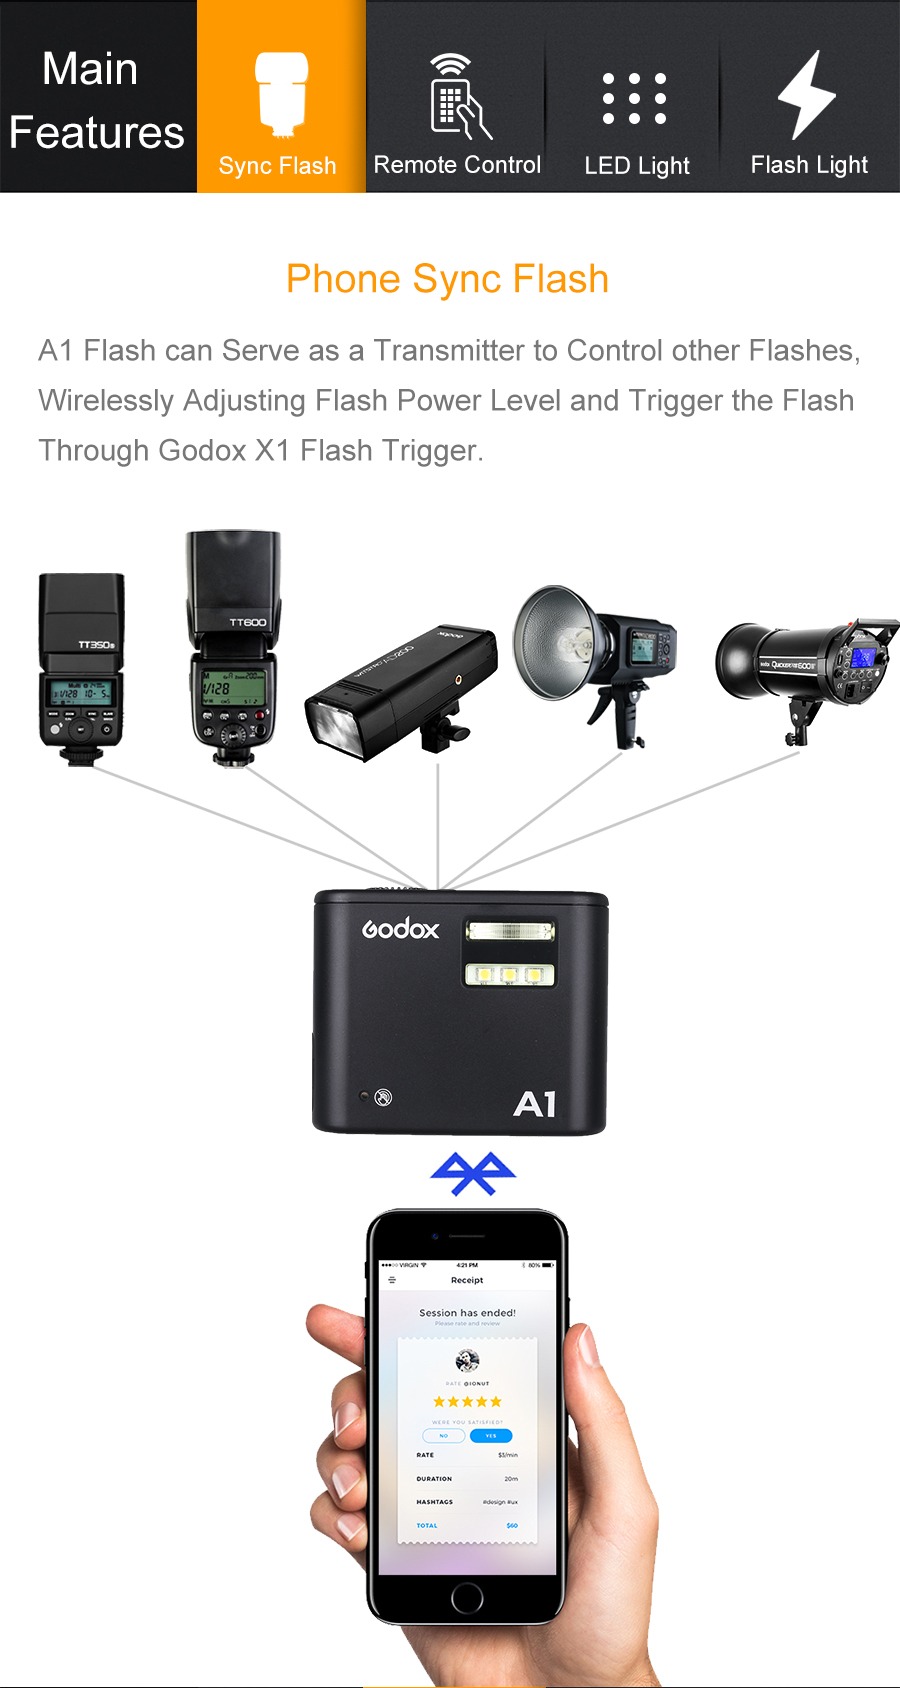  Godox A1 Smartphoneblixt & blixtutlsare